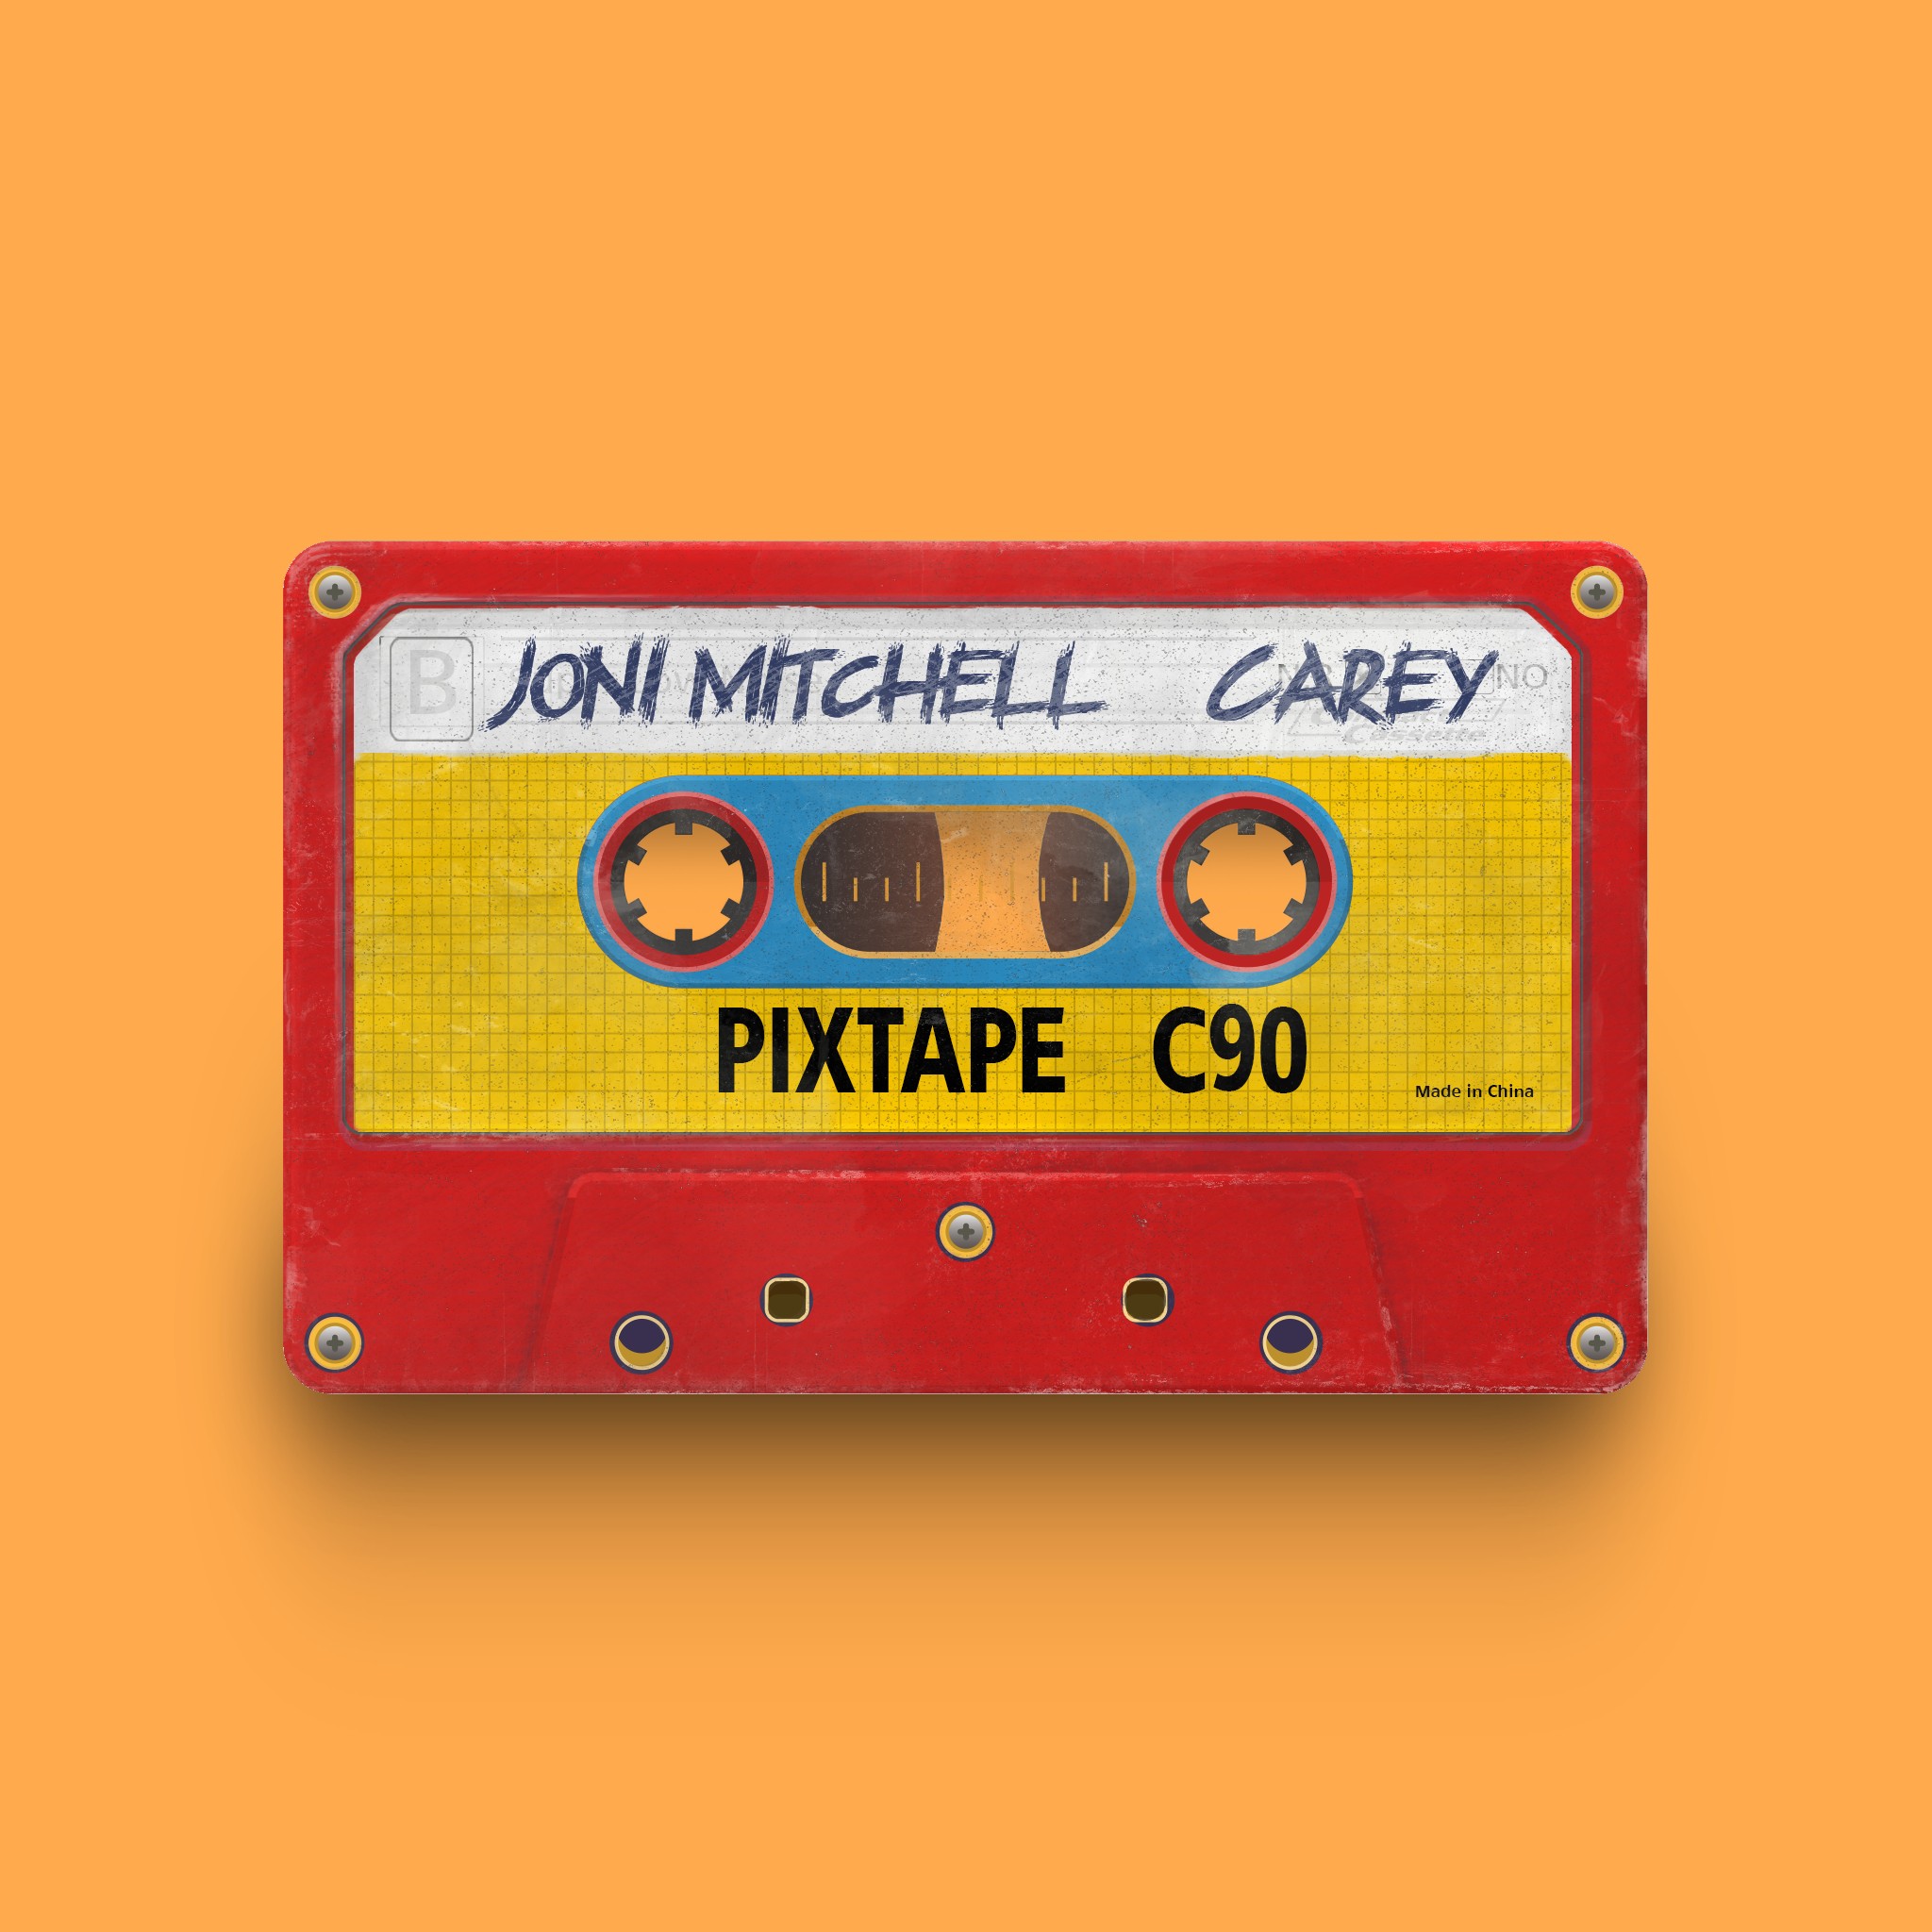 PixTape #6985 | Joni Mitchell - Carey